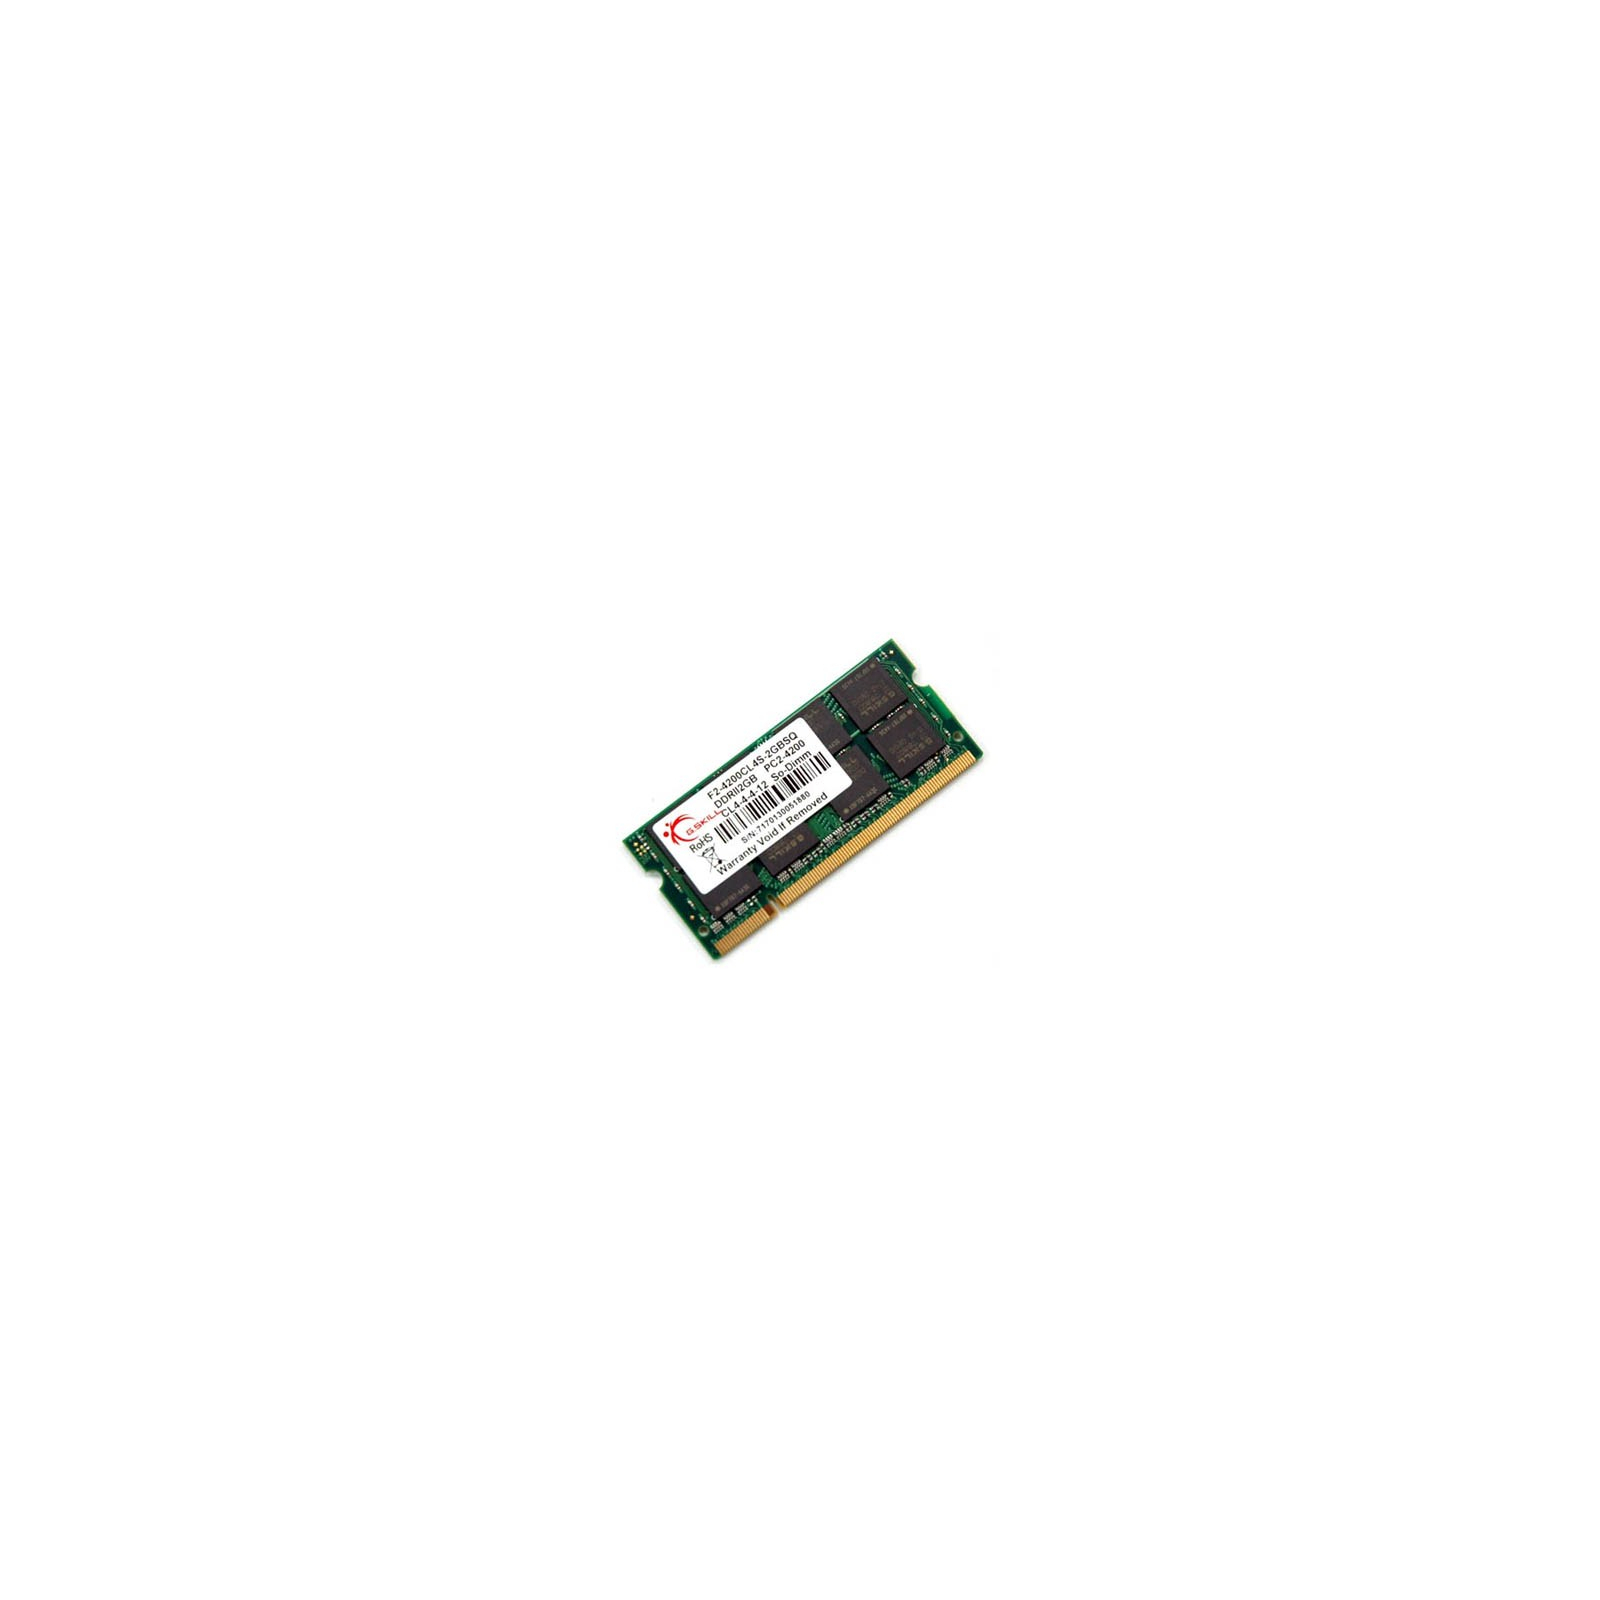 Модуль памяти для ноутбука SoDIMM DDR2 2GB 533 MHz G.Skill (F2-4200CL4S-2GBSQ)